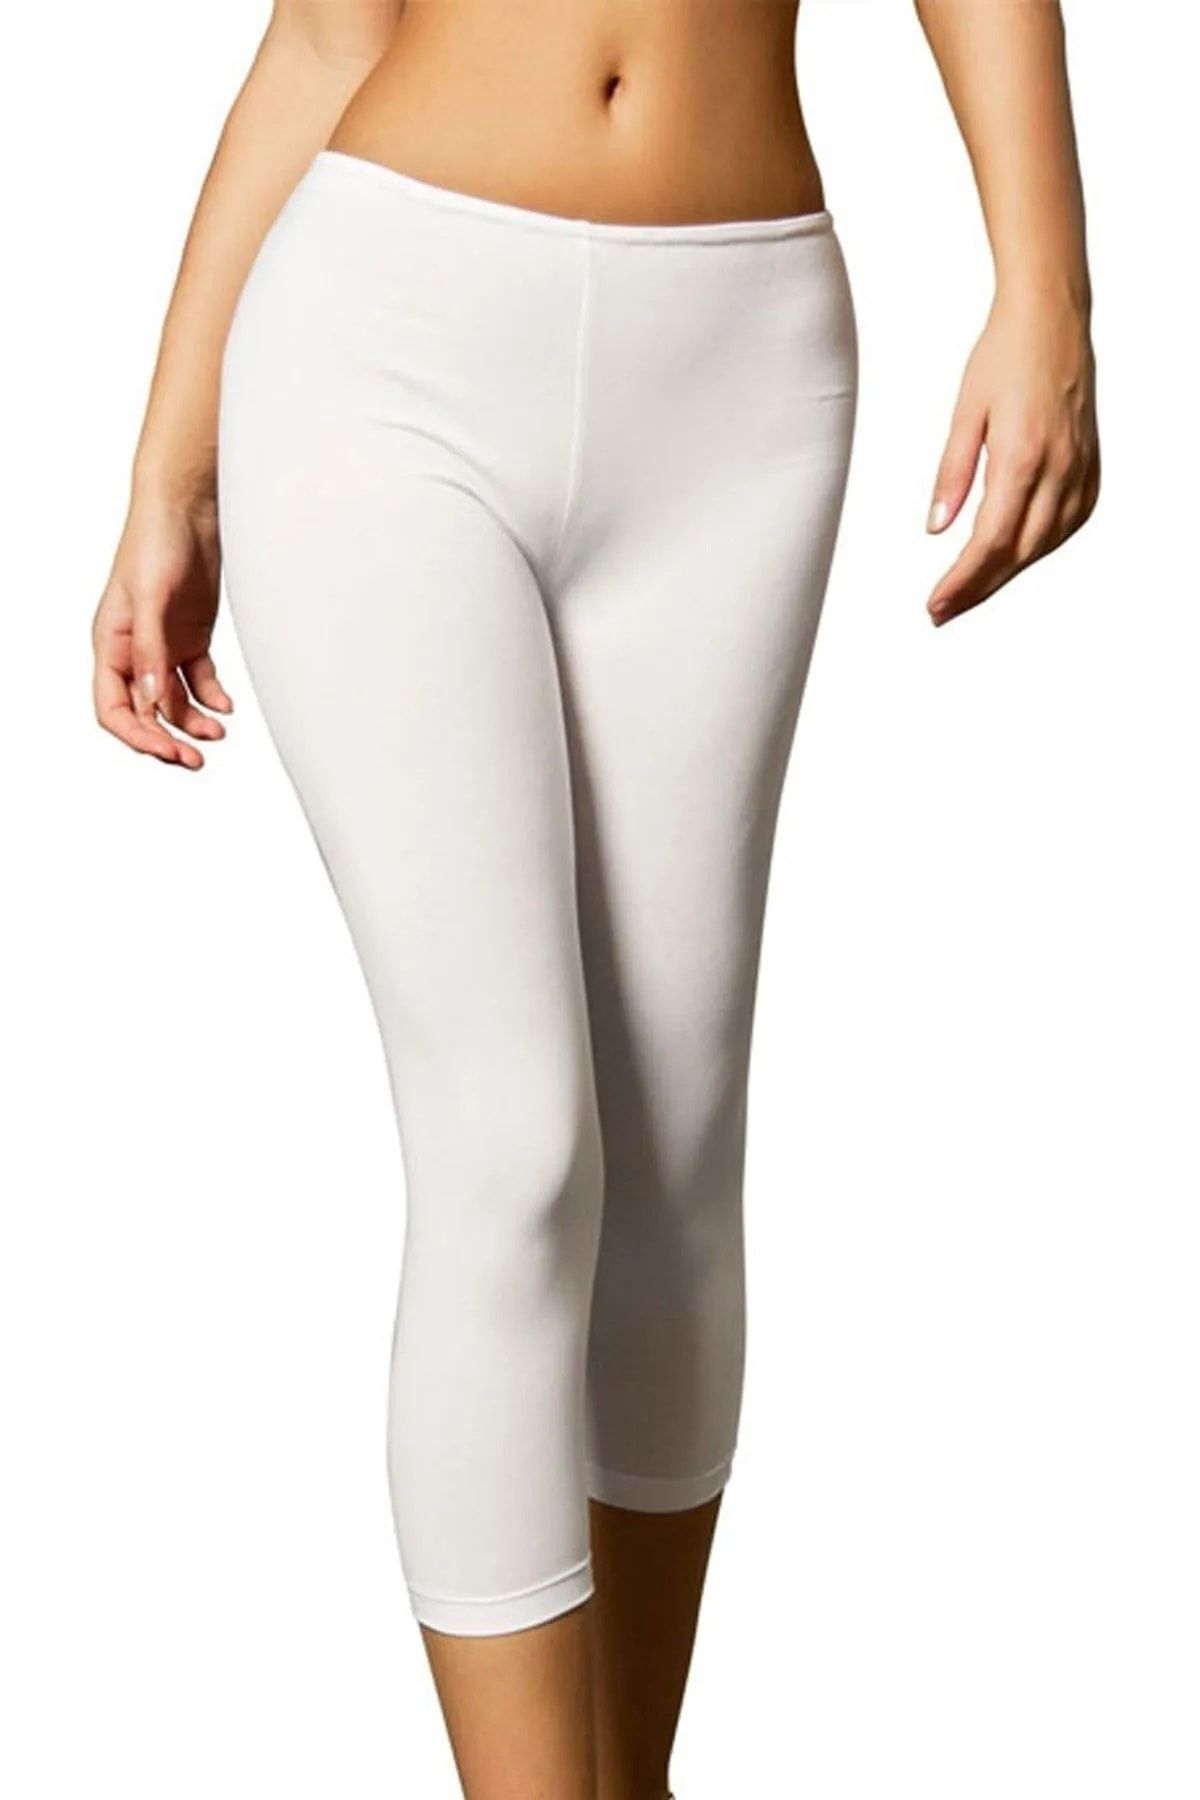 Hmd 3-Piece Women's Cotton White Knee Capri Tights & Comfortable Texture -  Trendyol